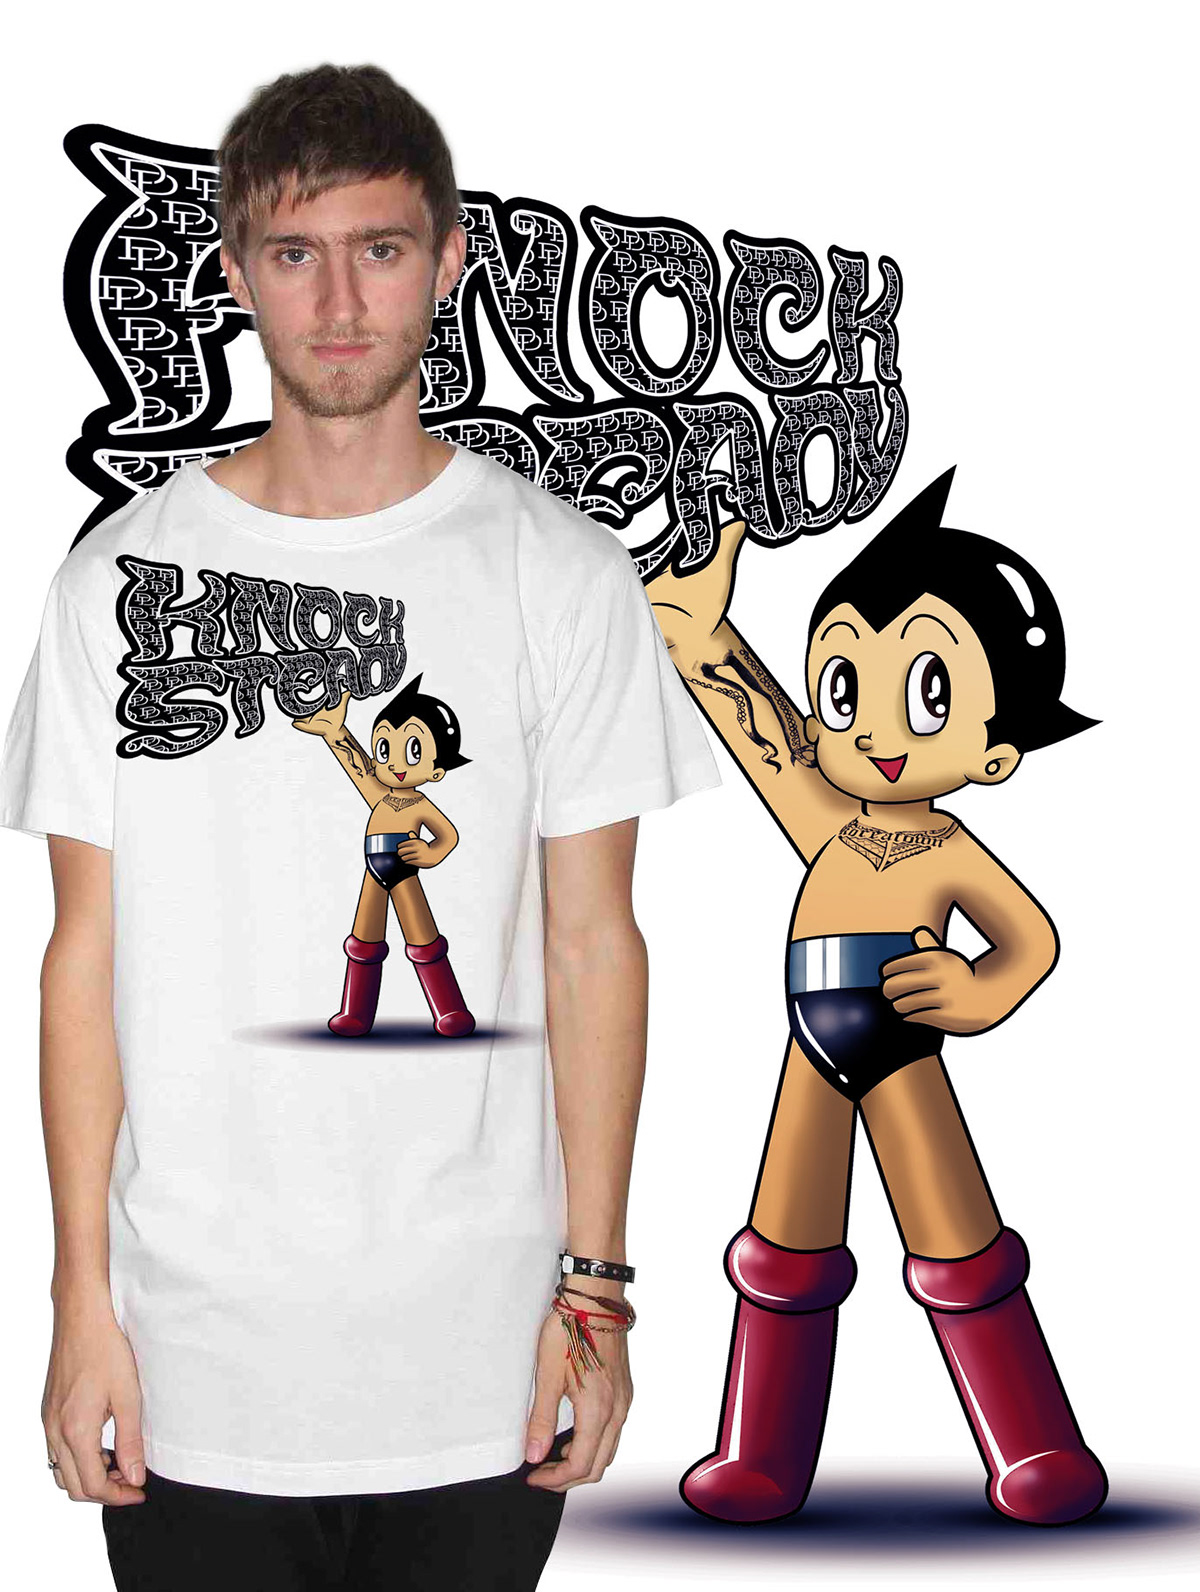 knocksteady Astroboy shirt